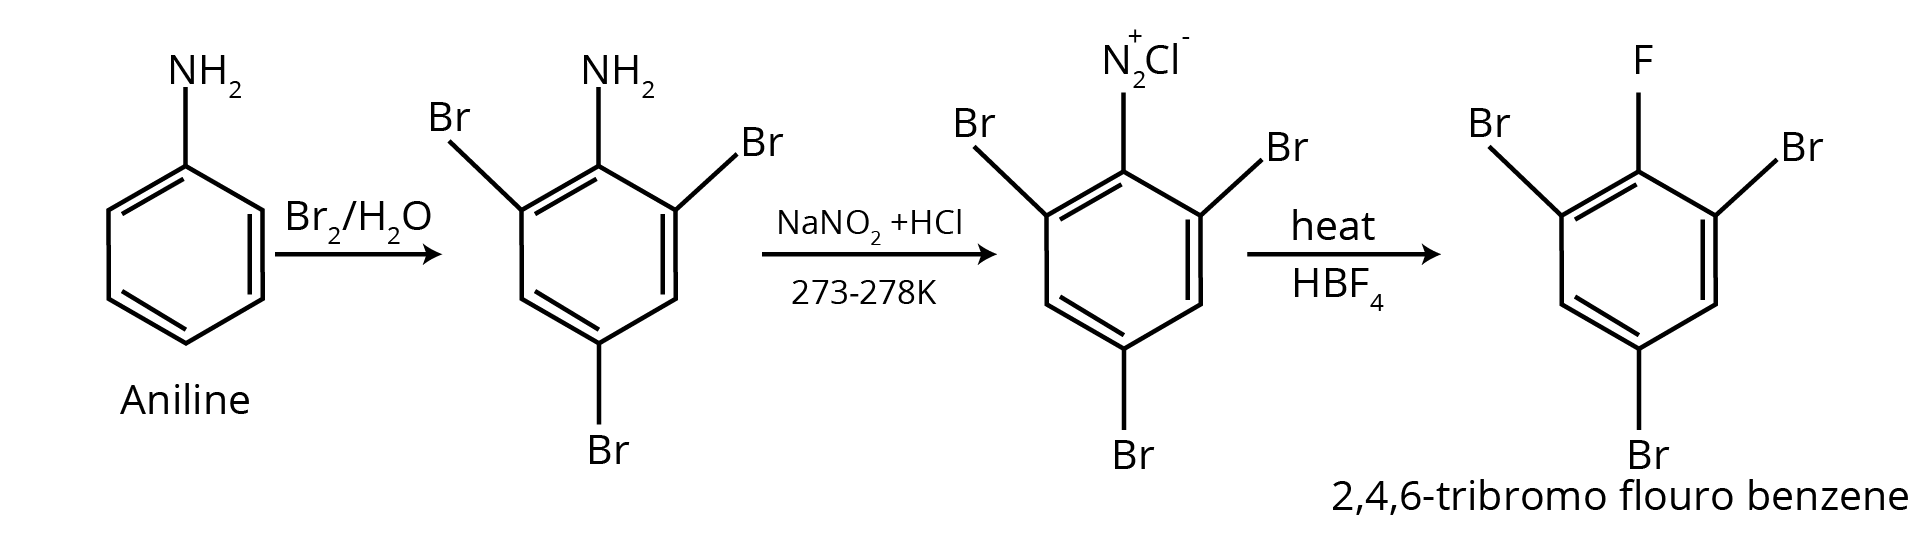 Aniline to 2,4,6-Tribromofluorobenzene